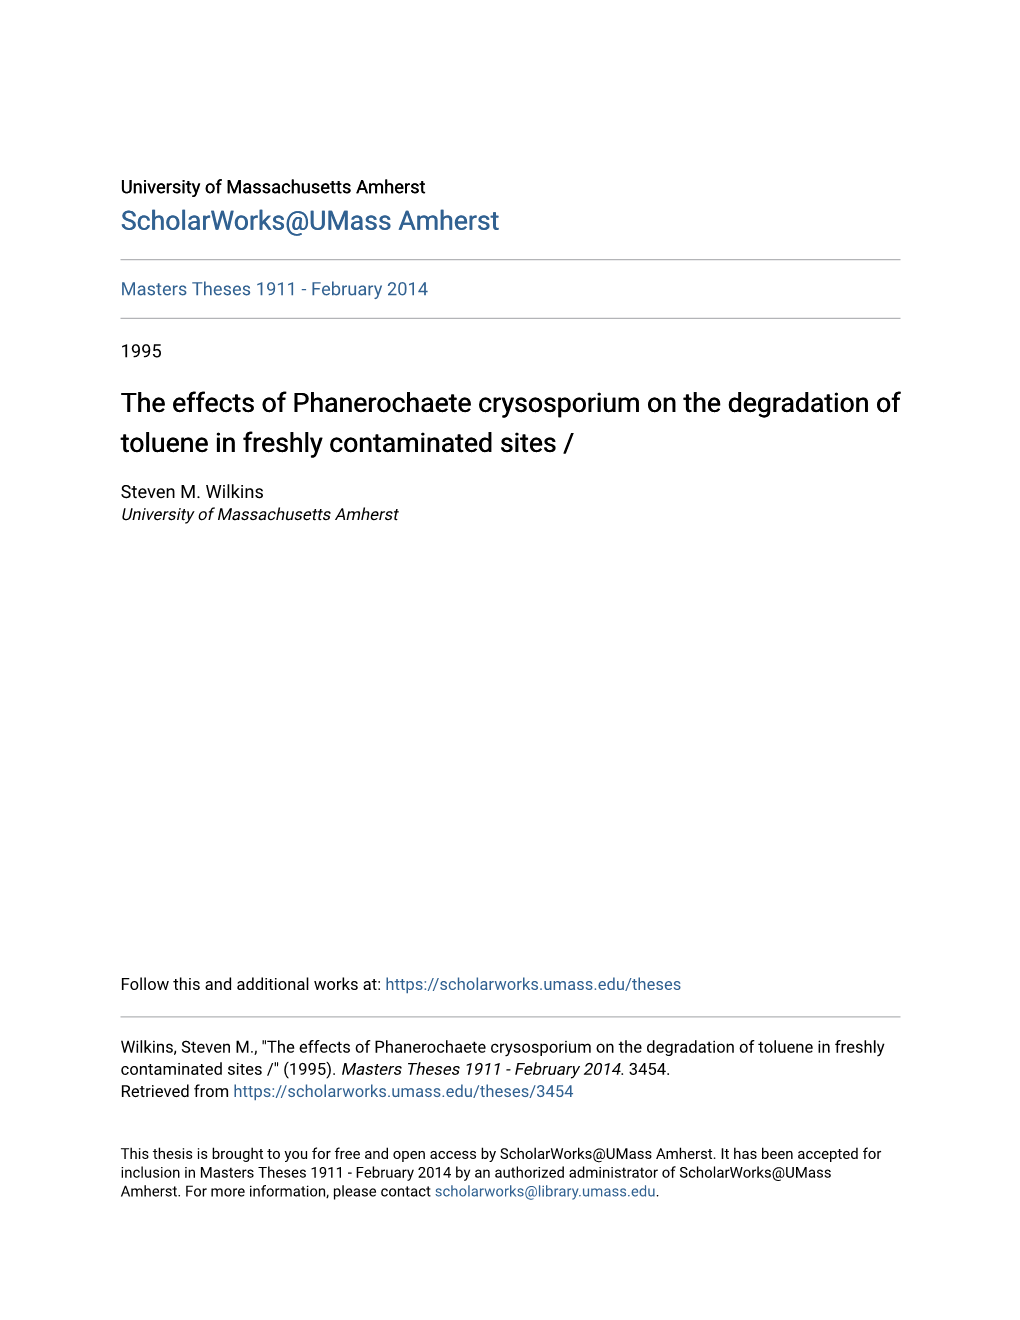 The Effects of Phanerochaete Crysosporium on the Degradation of Toluene in Freshly Contaminated Sites